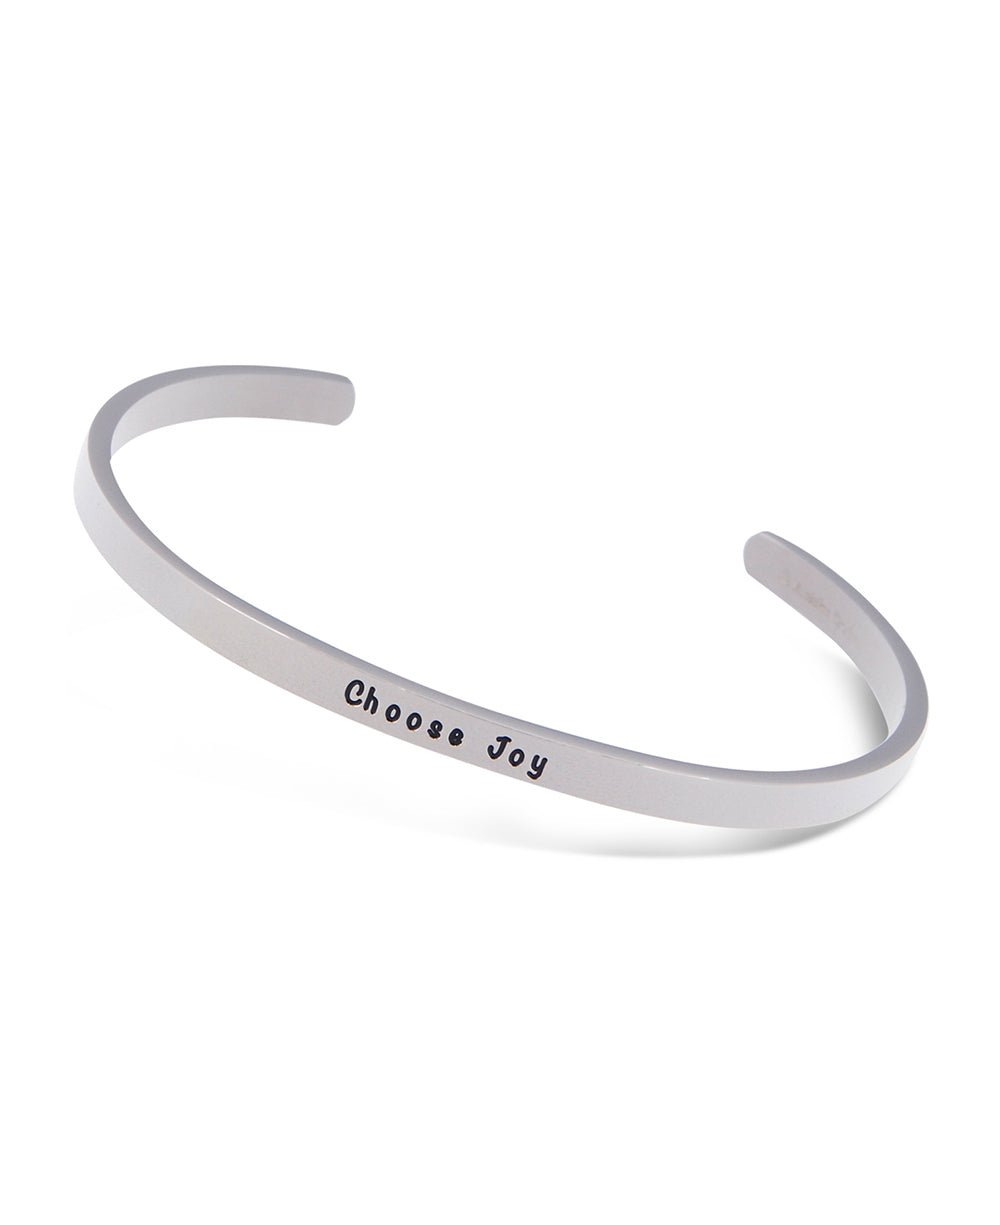 Engraved Metal Cuff Bracelet, Choose Joy - Bracelets